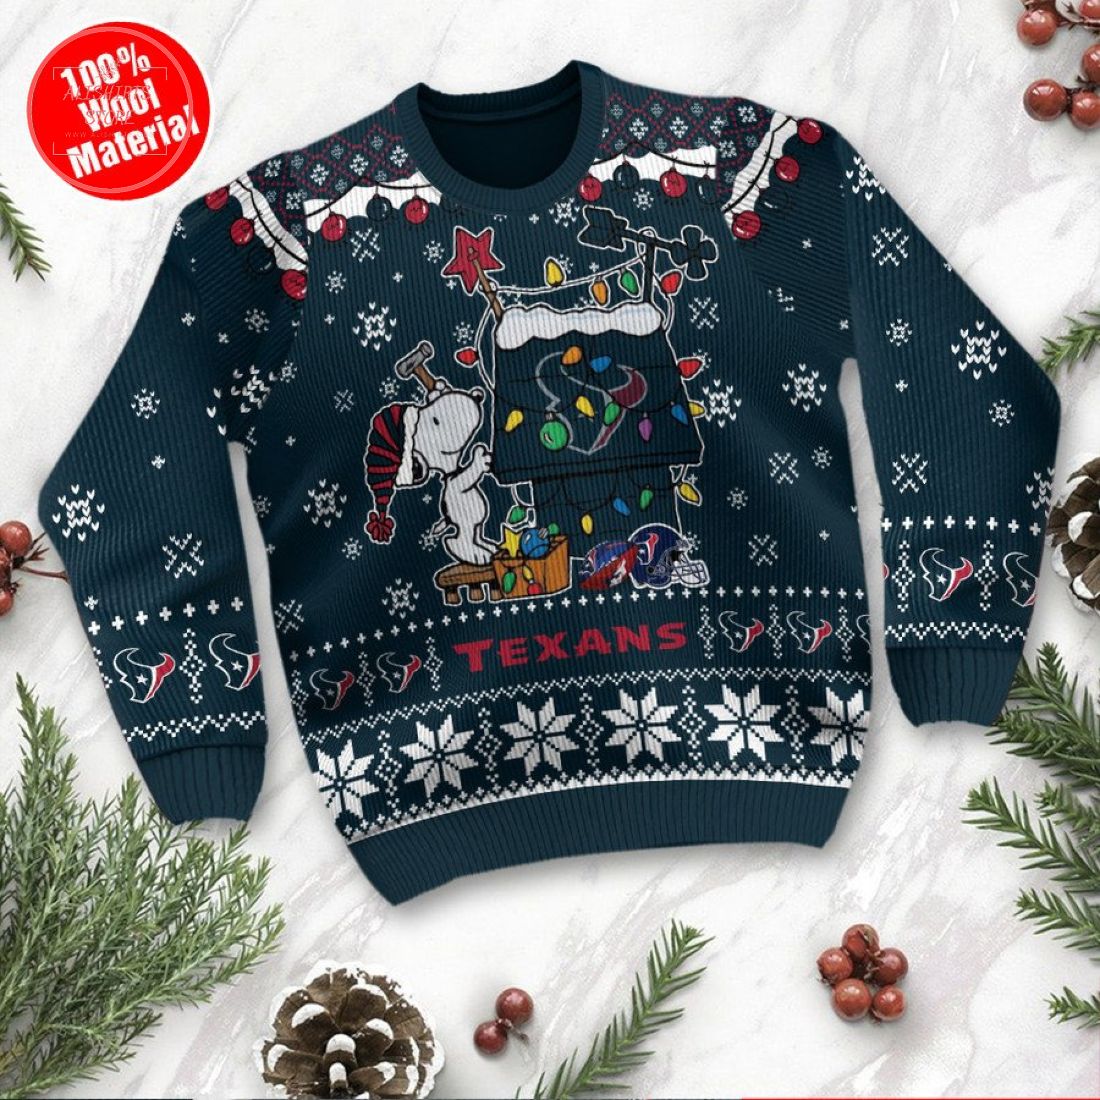 Houston Texans Snoopy Custom Ugly Christmas Sweater